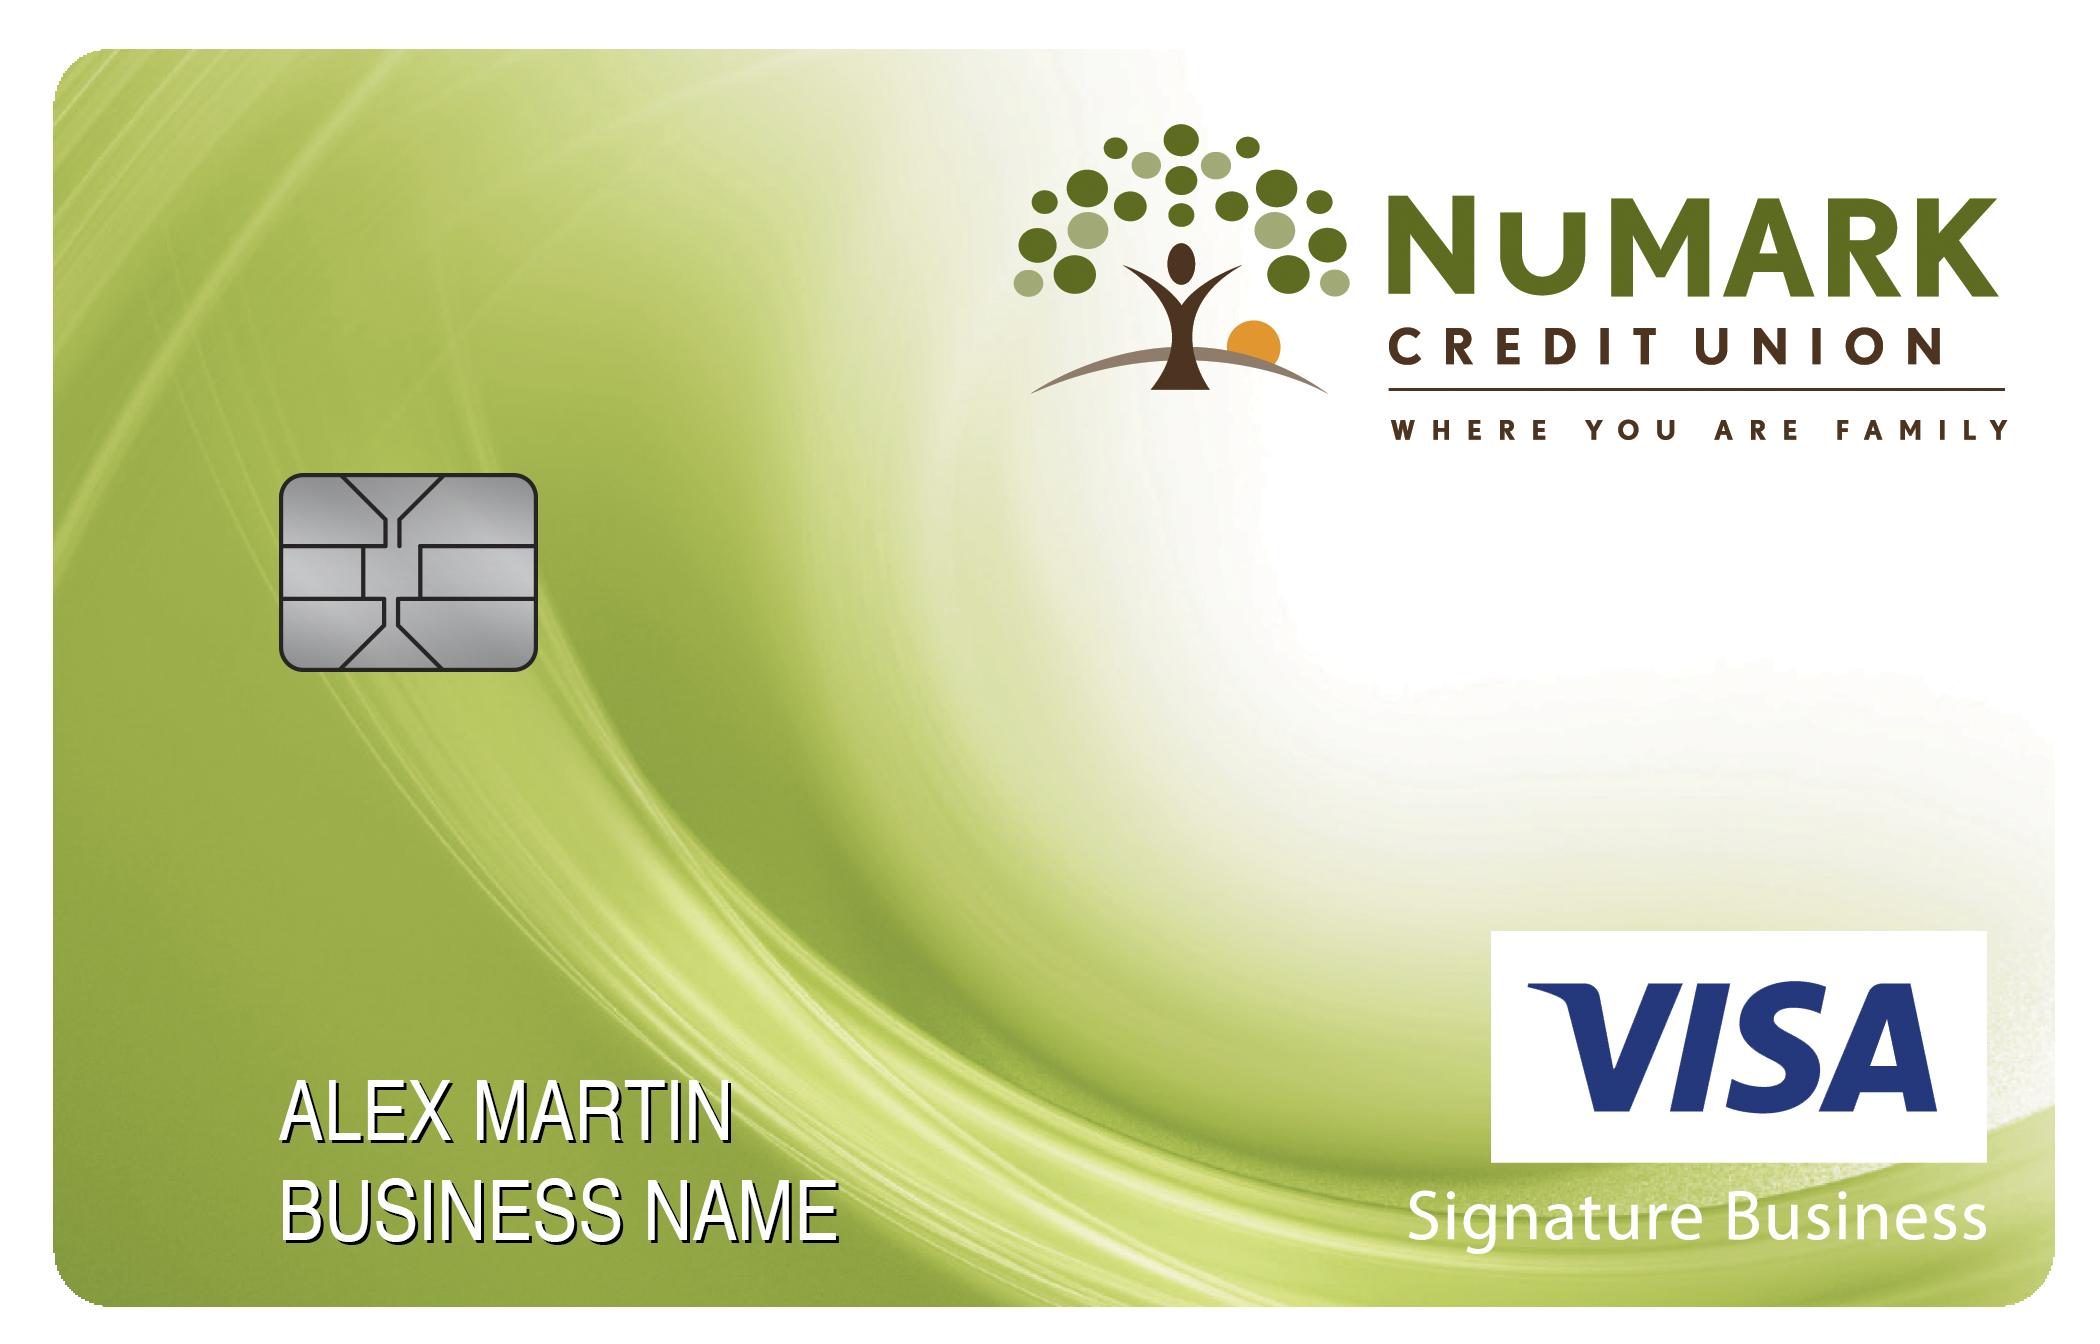 NuMark Credit Union Smart Business Rewards Card